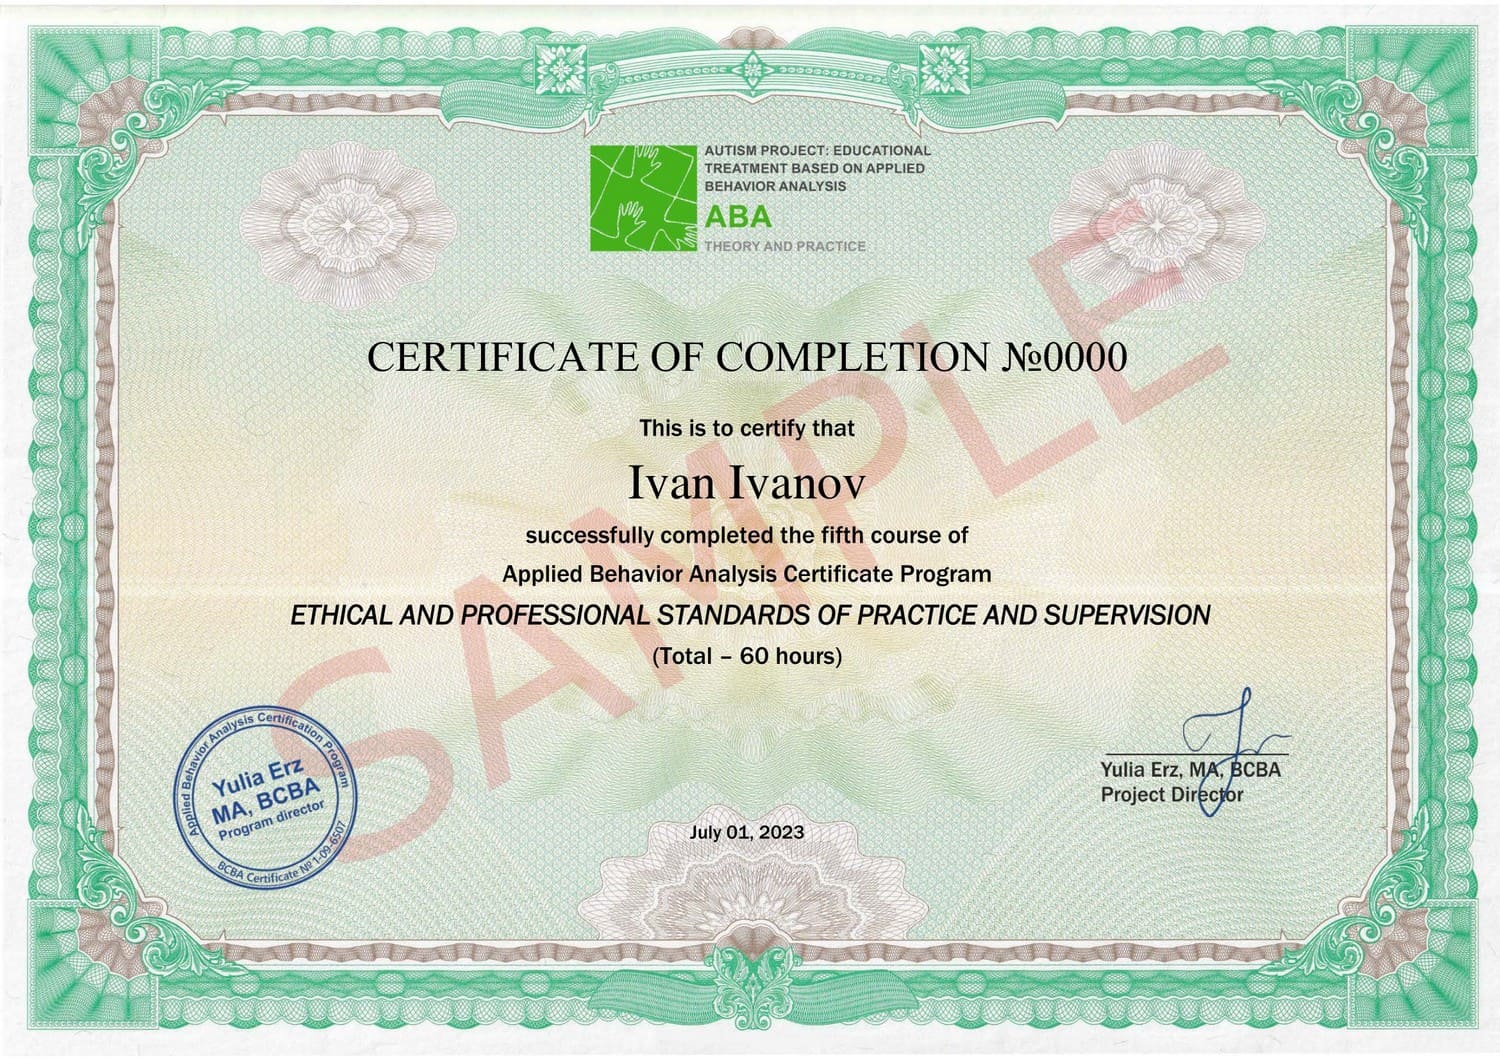 Сертификат об окончании 5-го модуля ABA